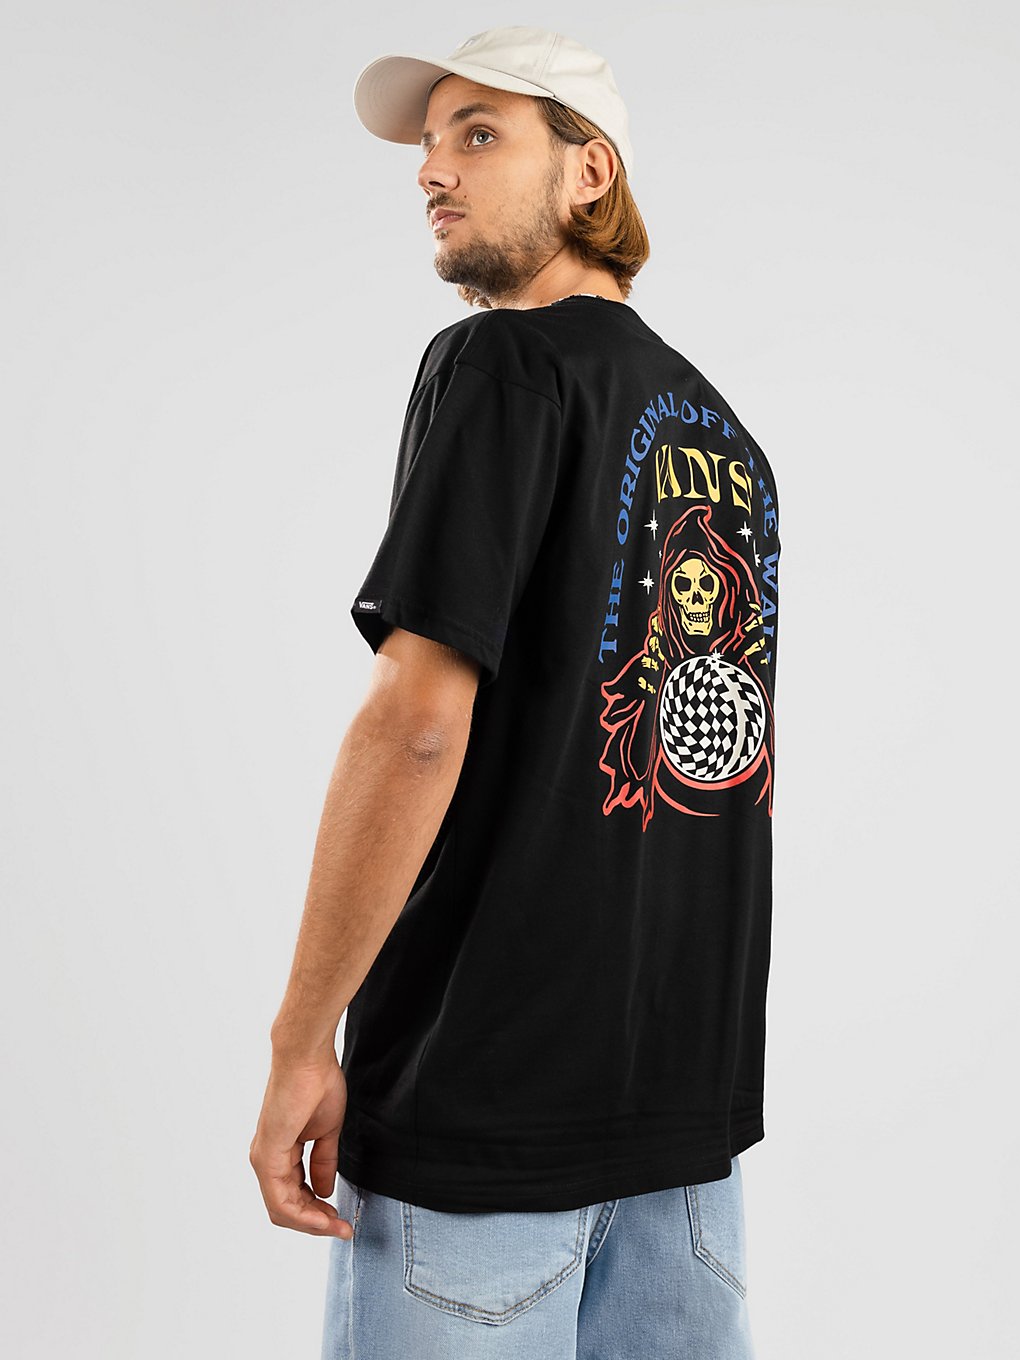 Vans Future Reaper T-Shirt black kaufen